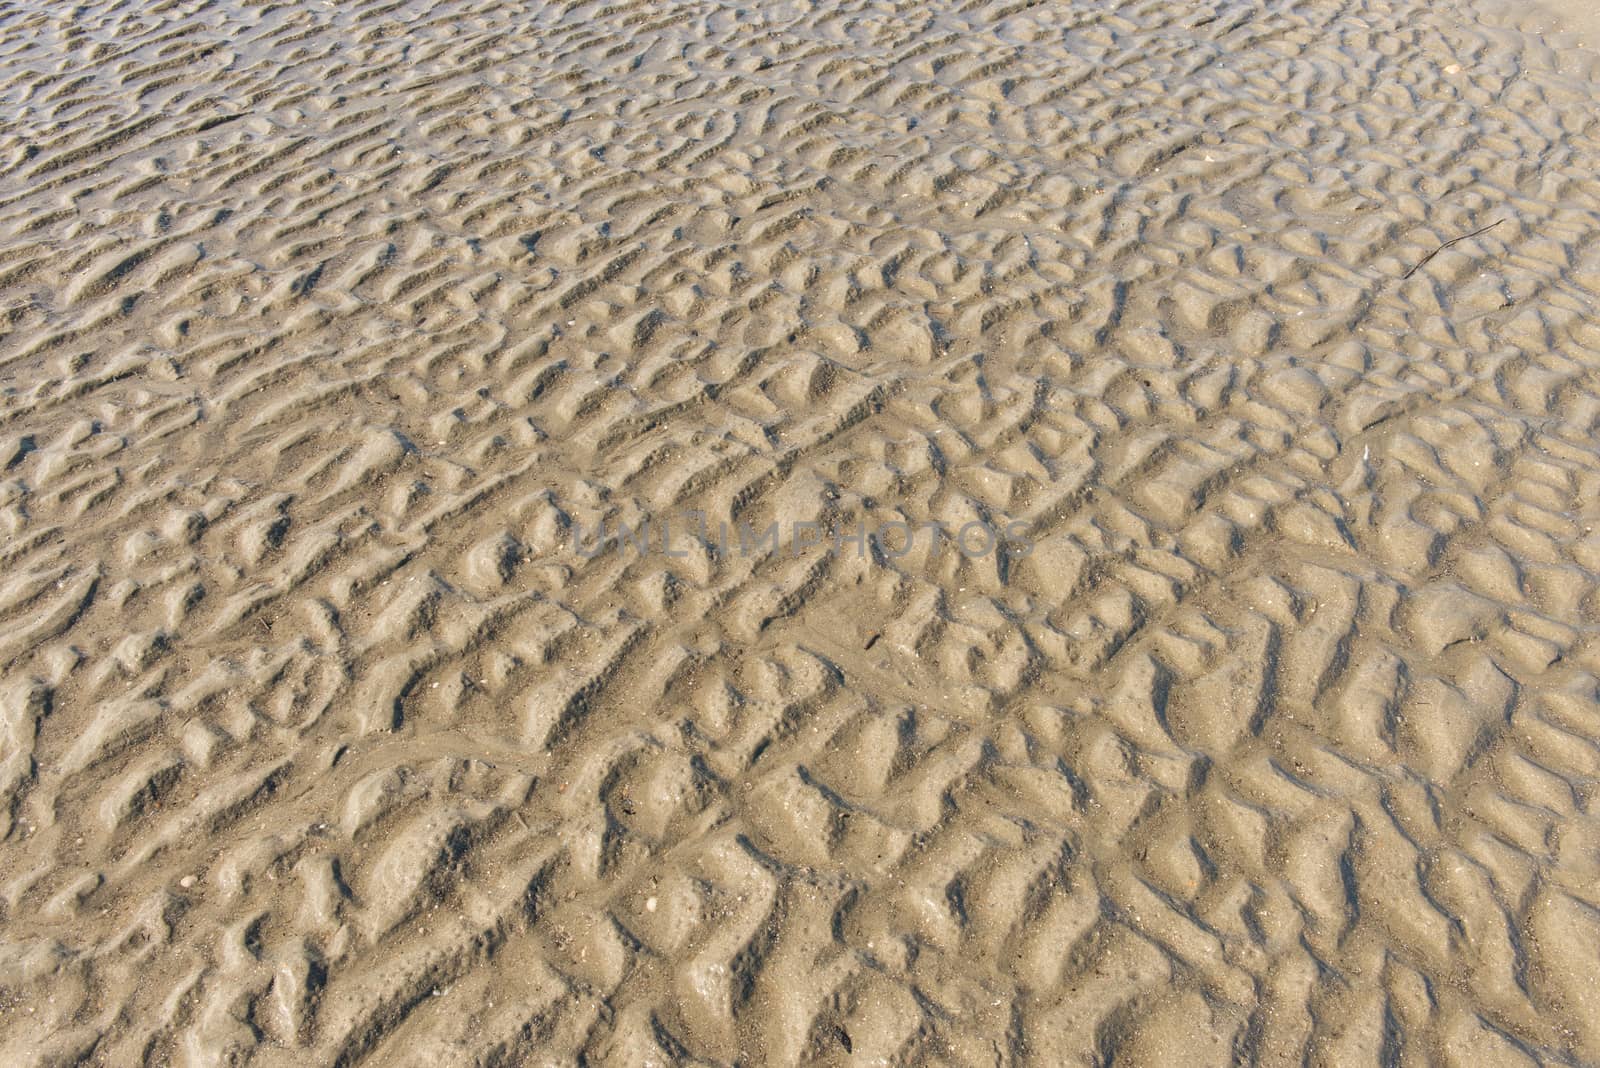 Wavy pattern of the sandy ocean floor at low tide.